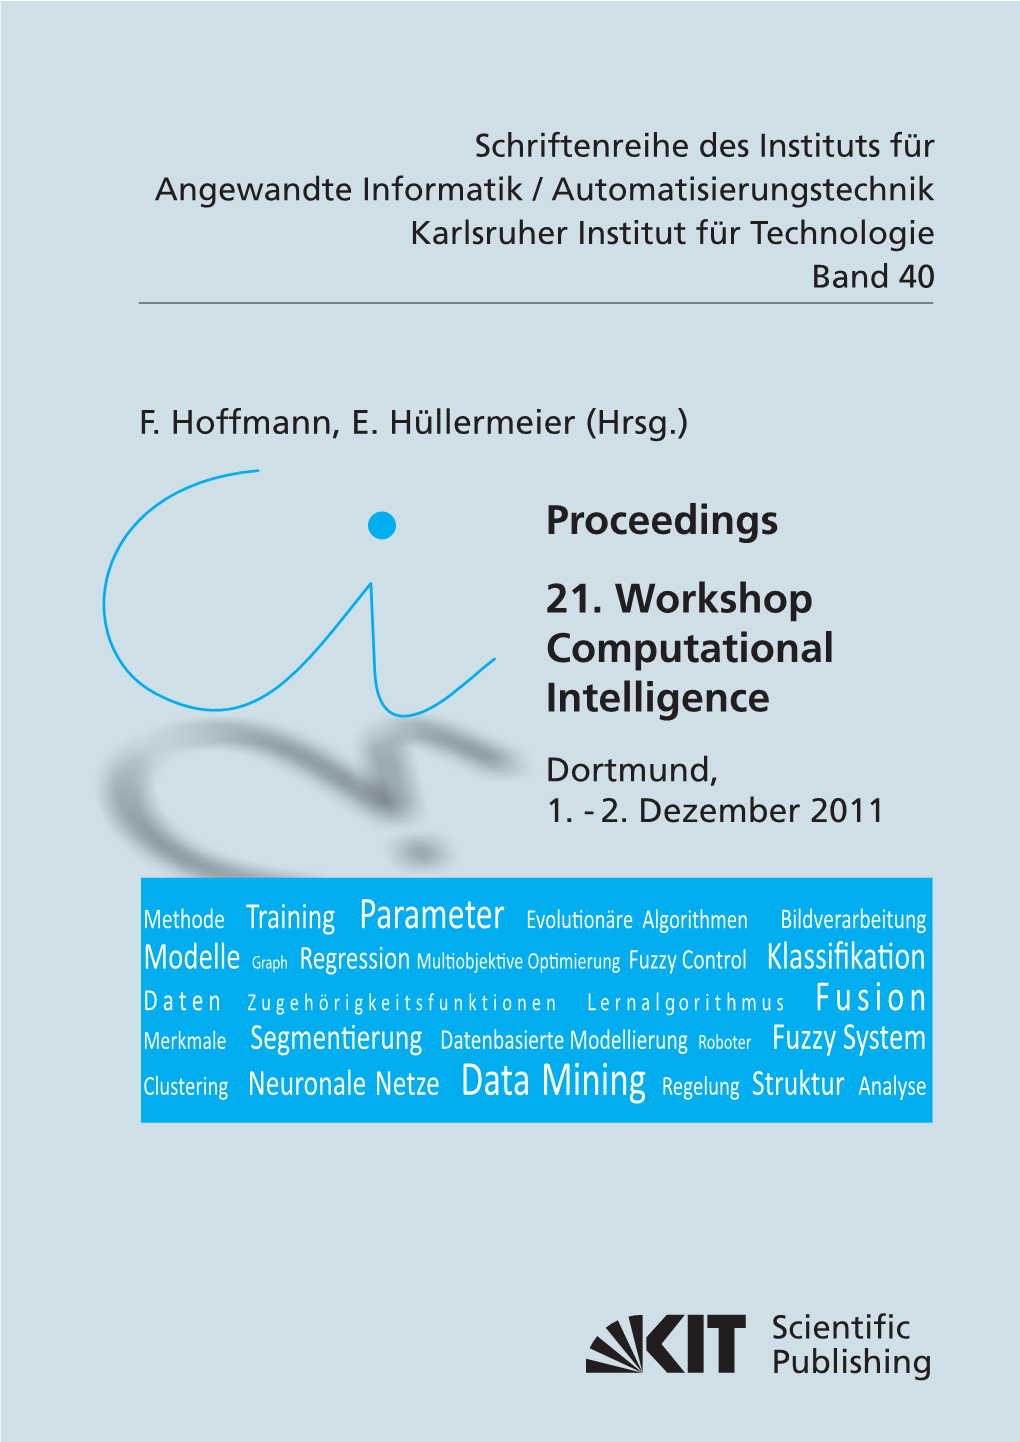 Proceedings. 21. Workshop Computational Intelligence, Dortmund, 1